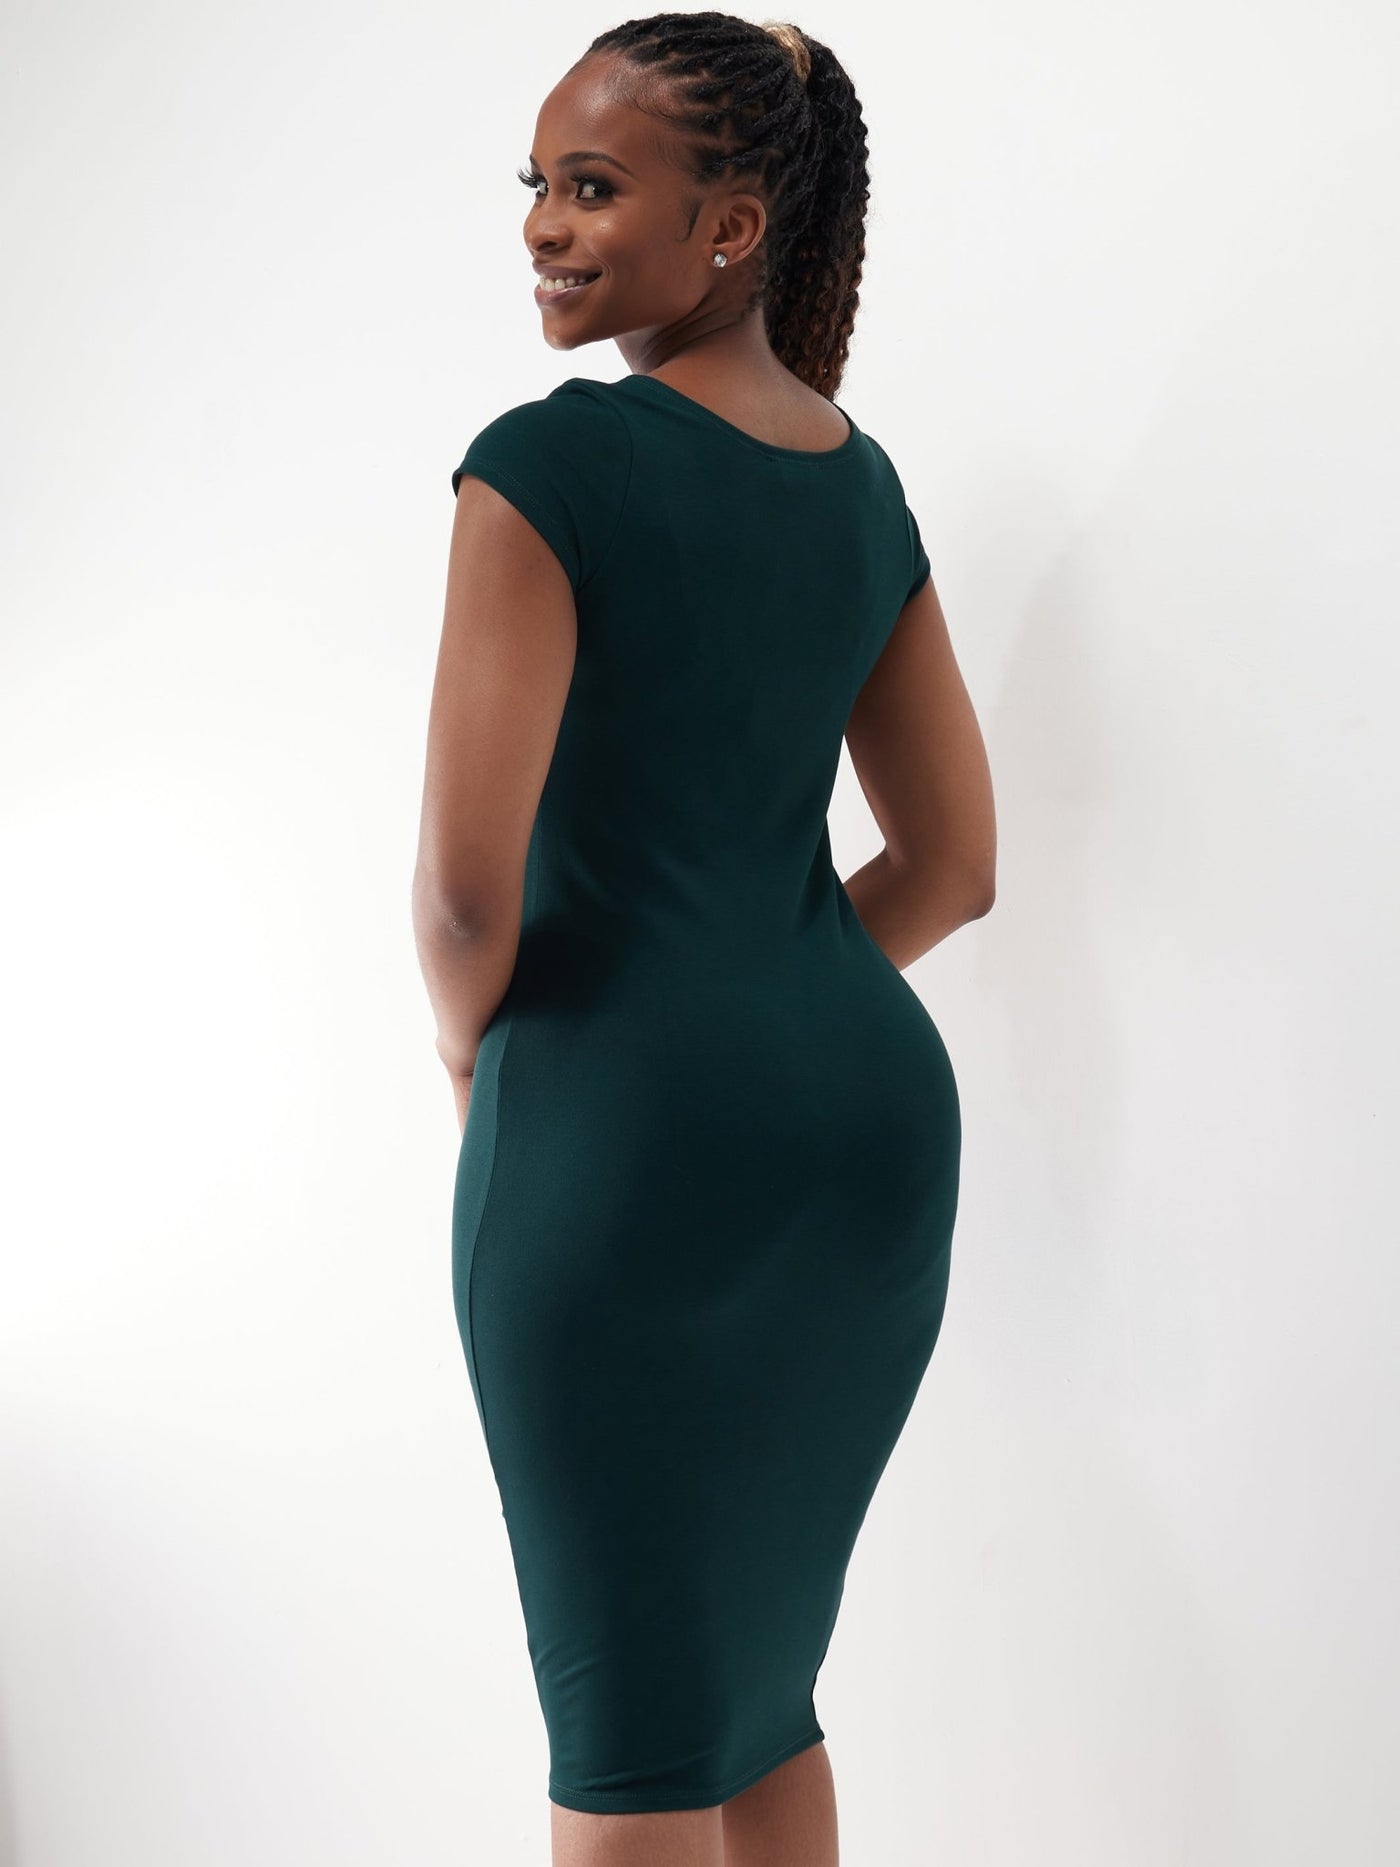 Vivo Basic Cap Sleeved Leila Dress - Dark Green - Shop Zetu Kenya